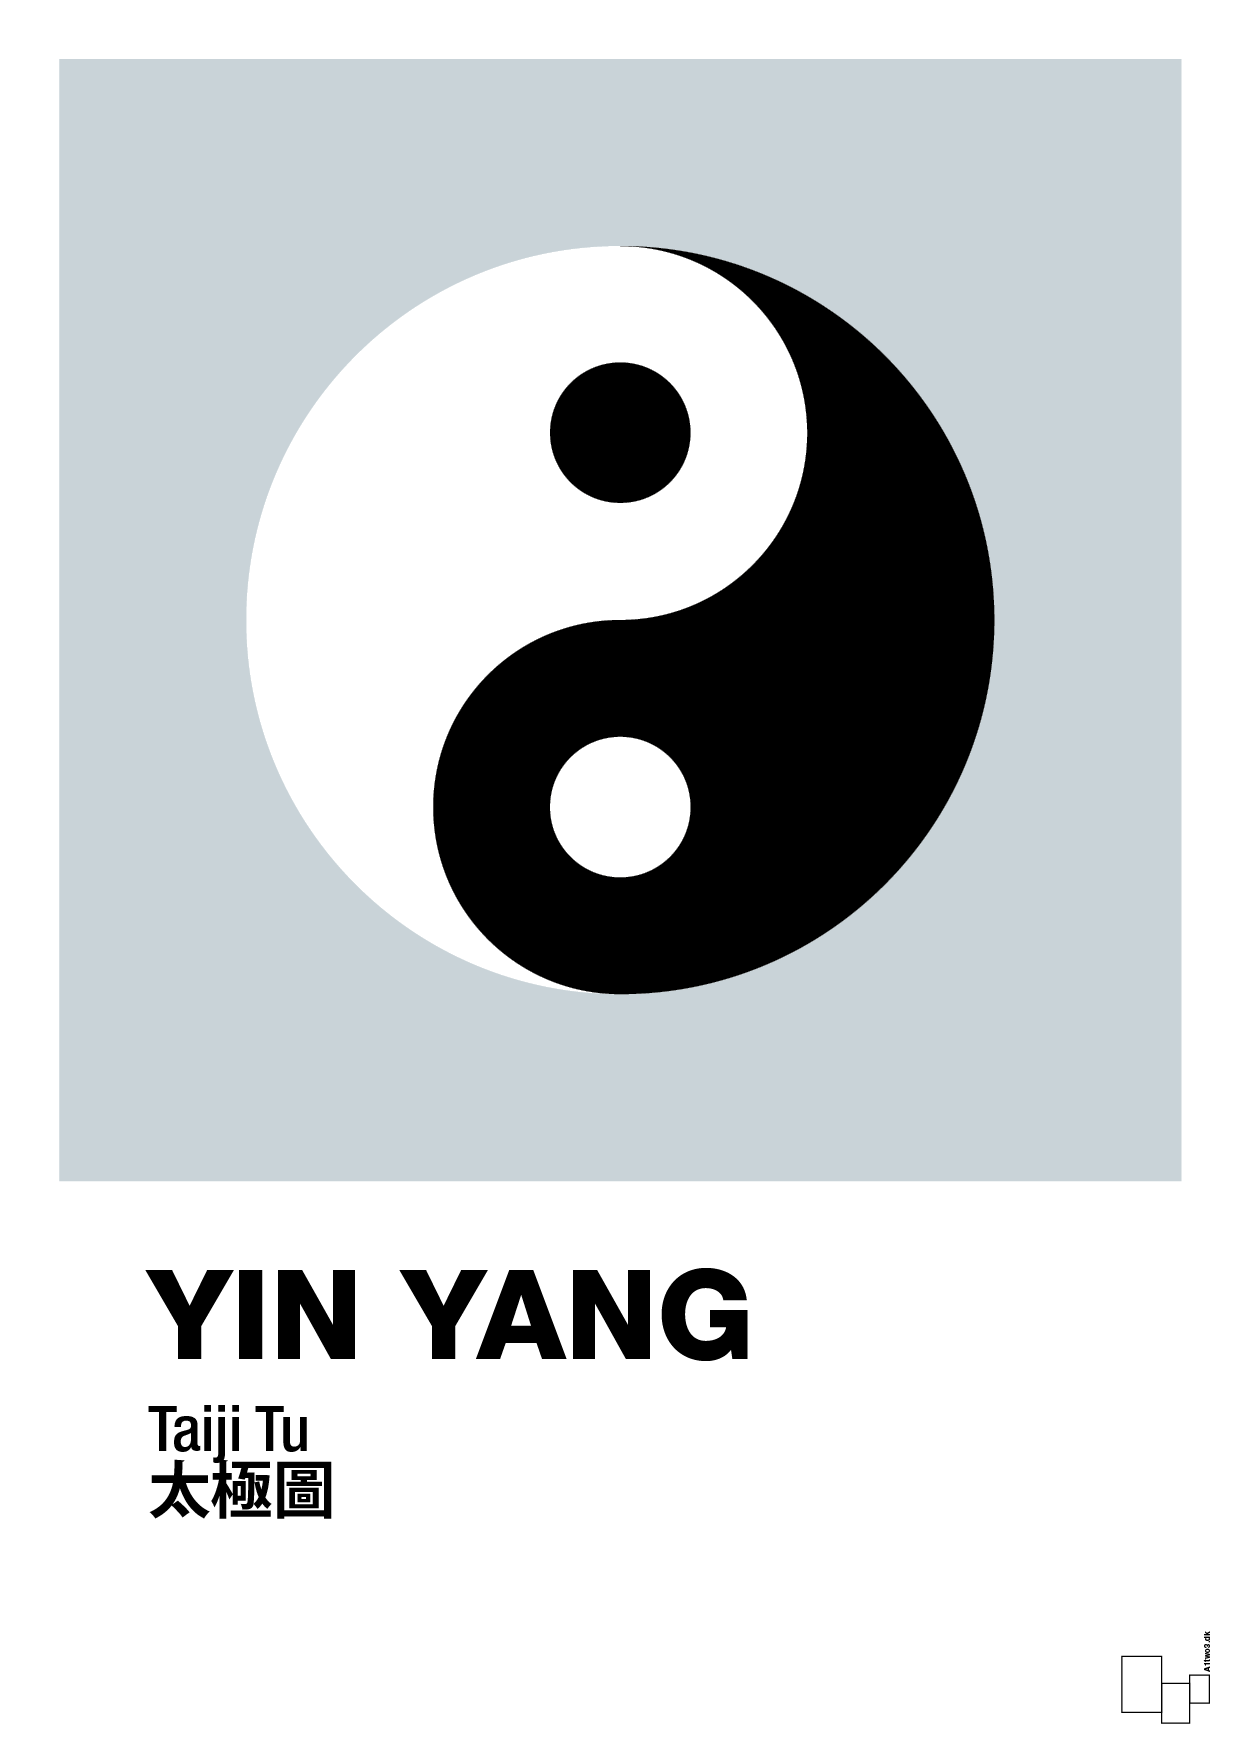 yin yang - Plakat med Videnskab i Light Drizzle